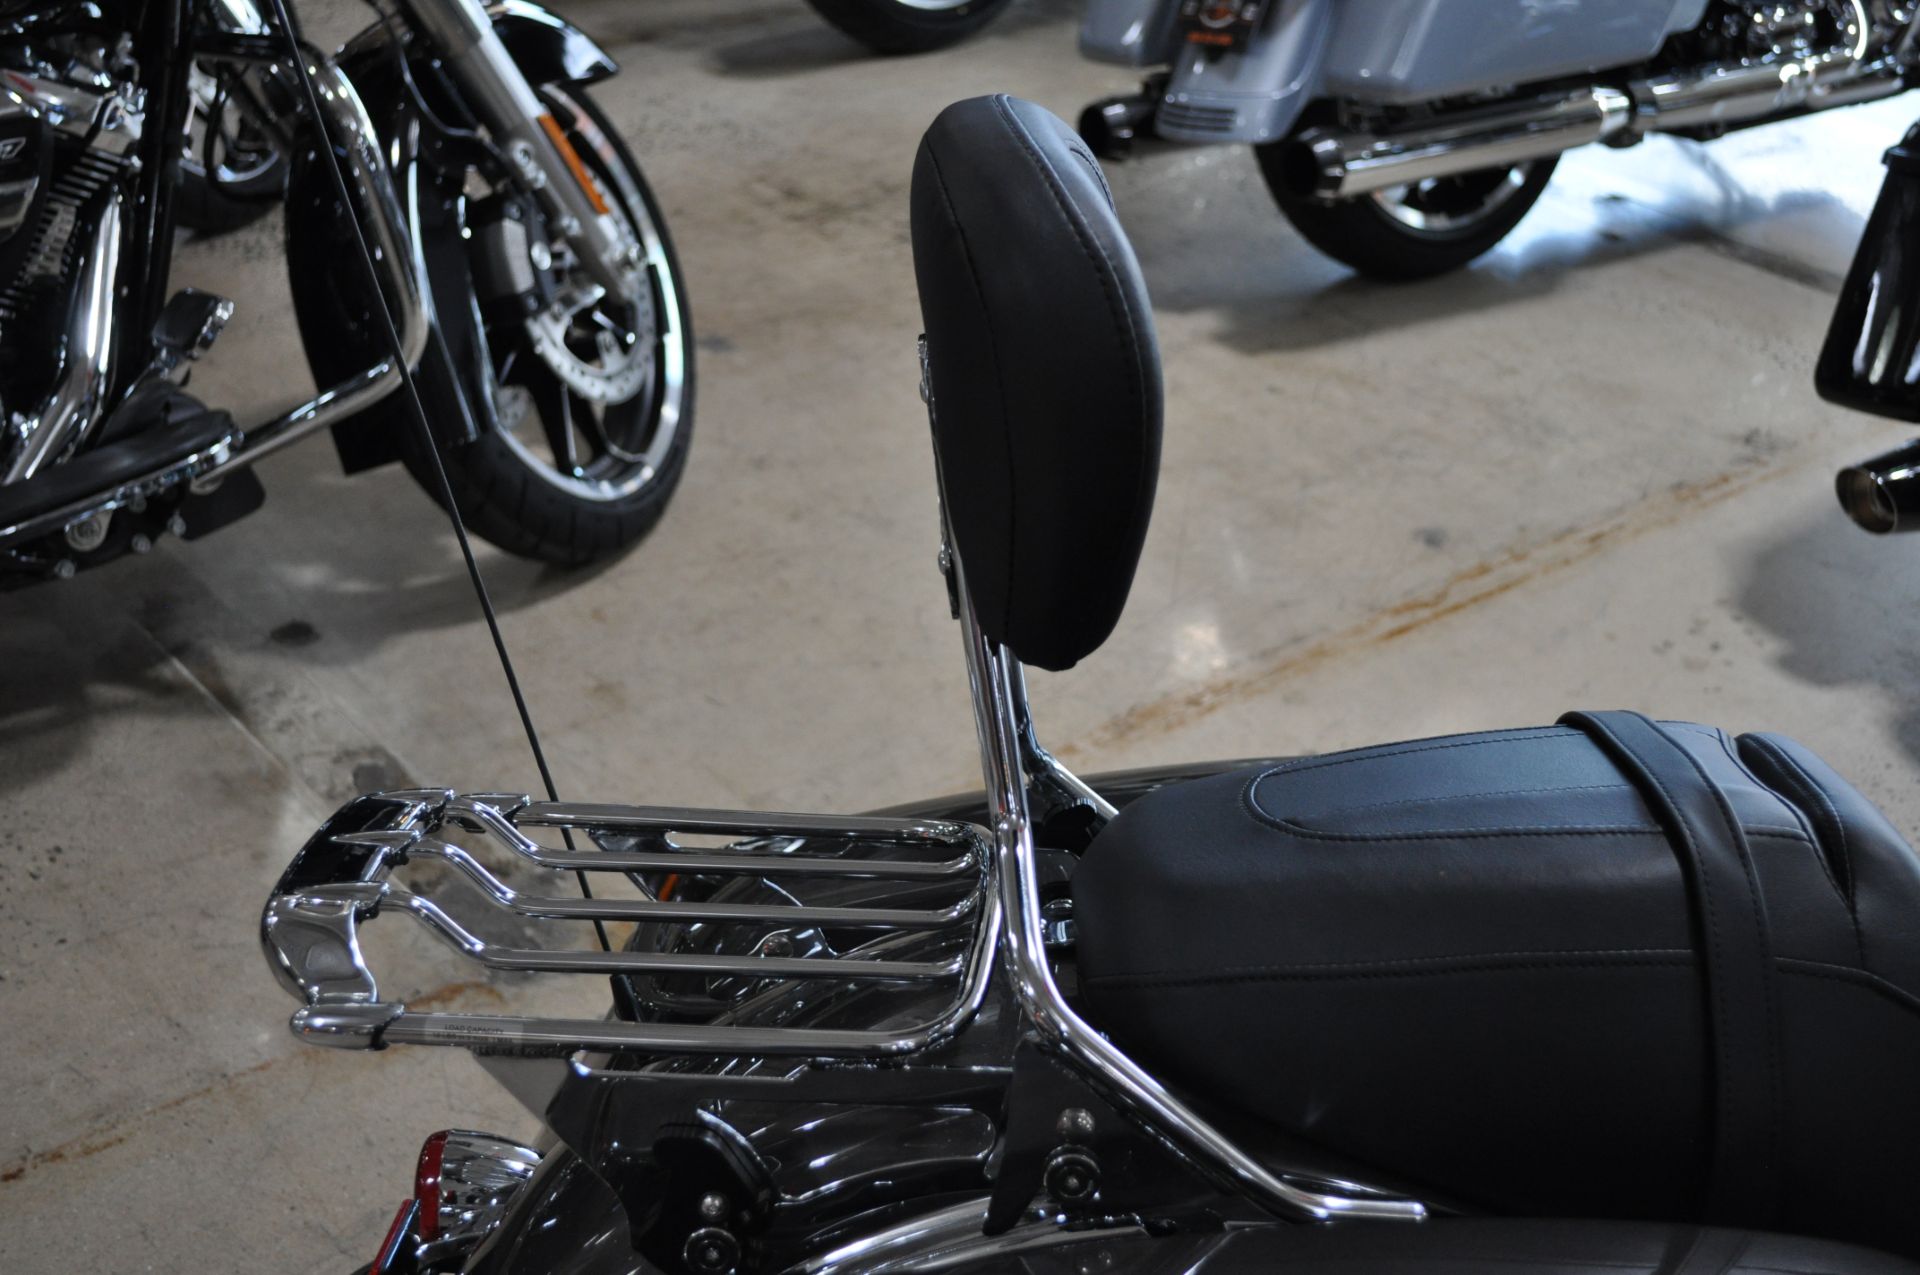 2023 Harley-Davidson Street Glide® Special in Winston Salem, North Carolina - Photo 15